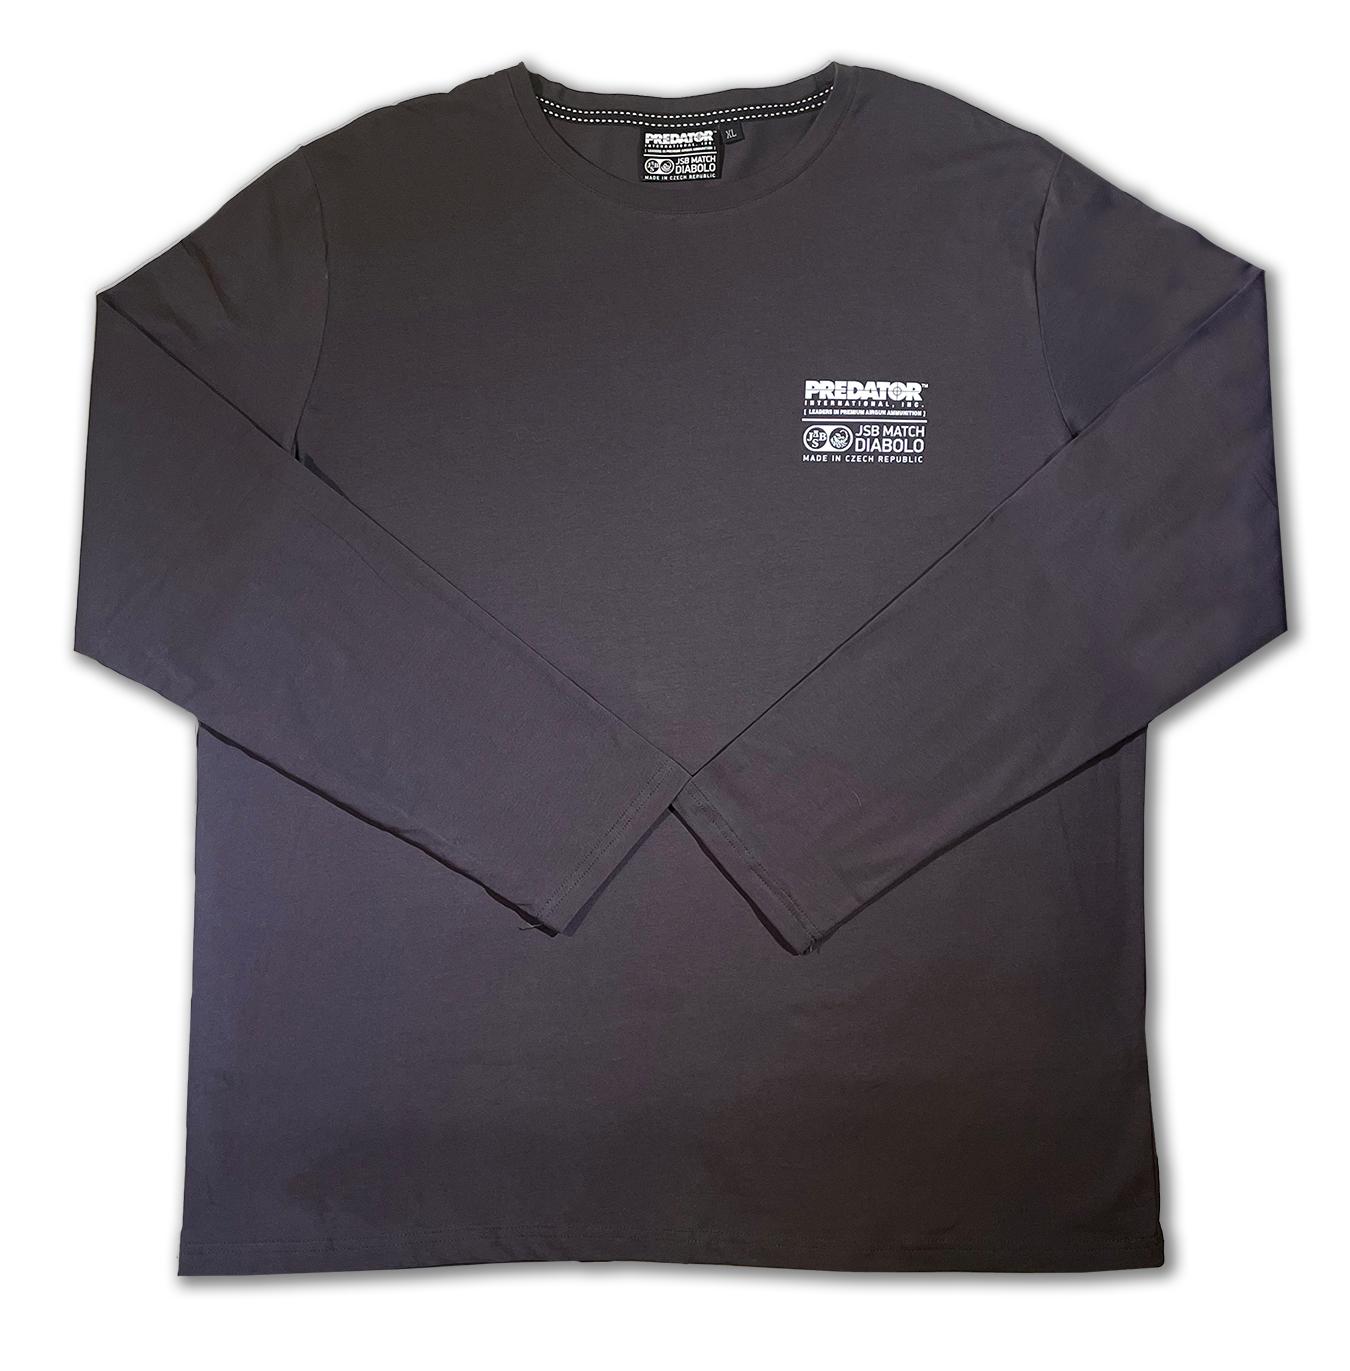 JSB Predator Long Sleeve Cotton/Spandex T-Shirt, Grey, Medium